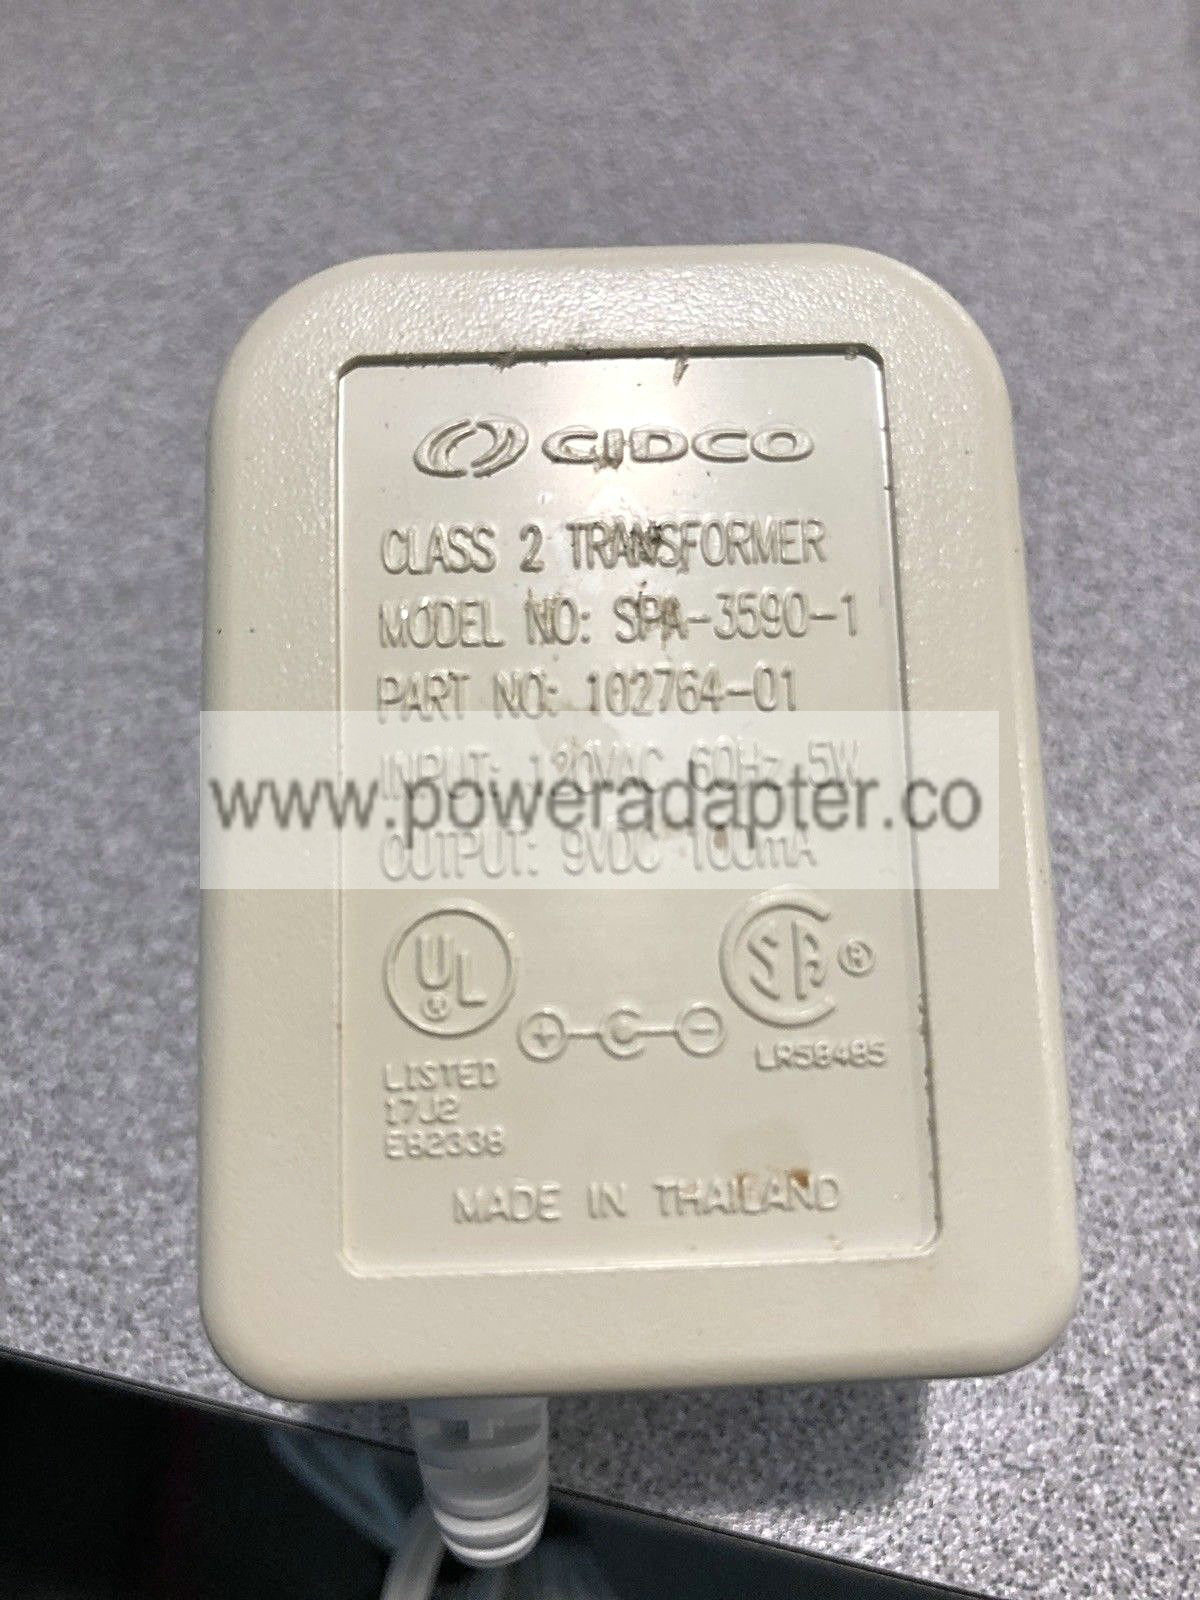 CIDCO SPA-3590-1 Class 2 Transformer Power Supply AC Adapter Output DC 9V 100mA Cidco Class 2 Transformer Model numb